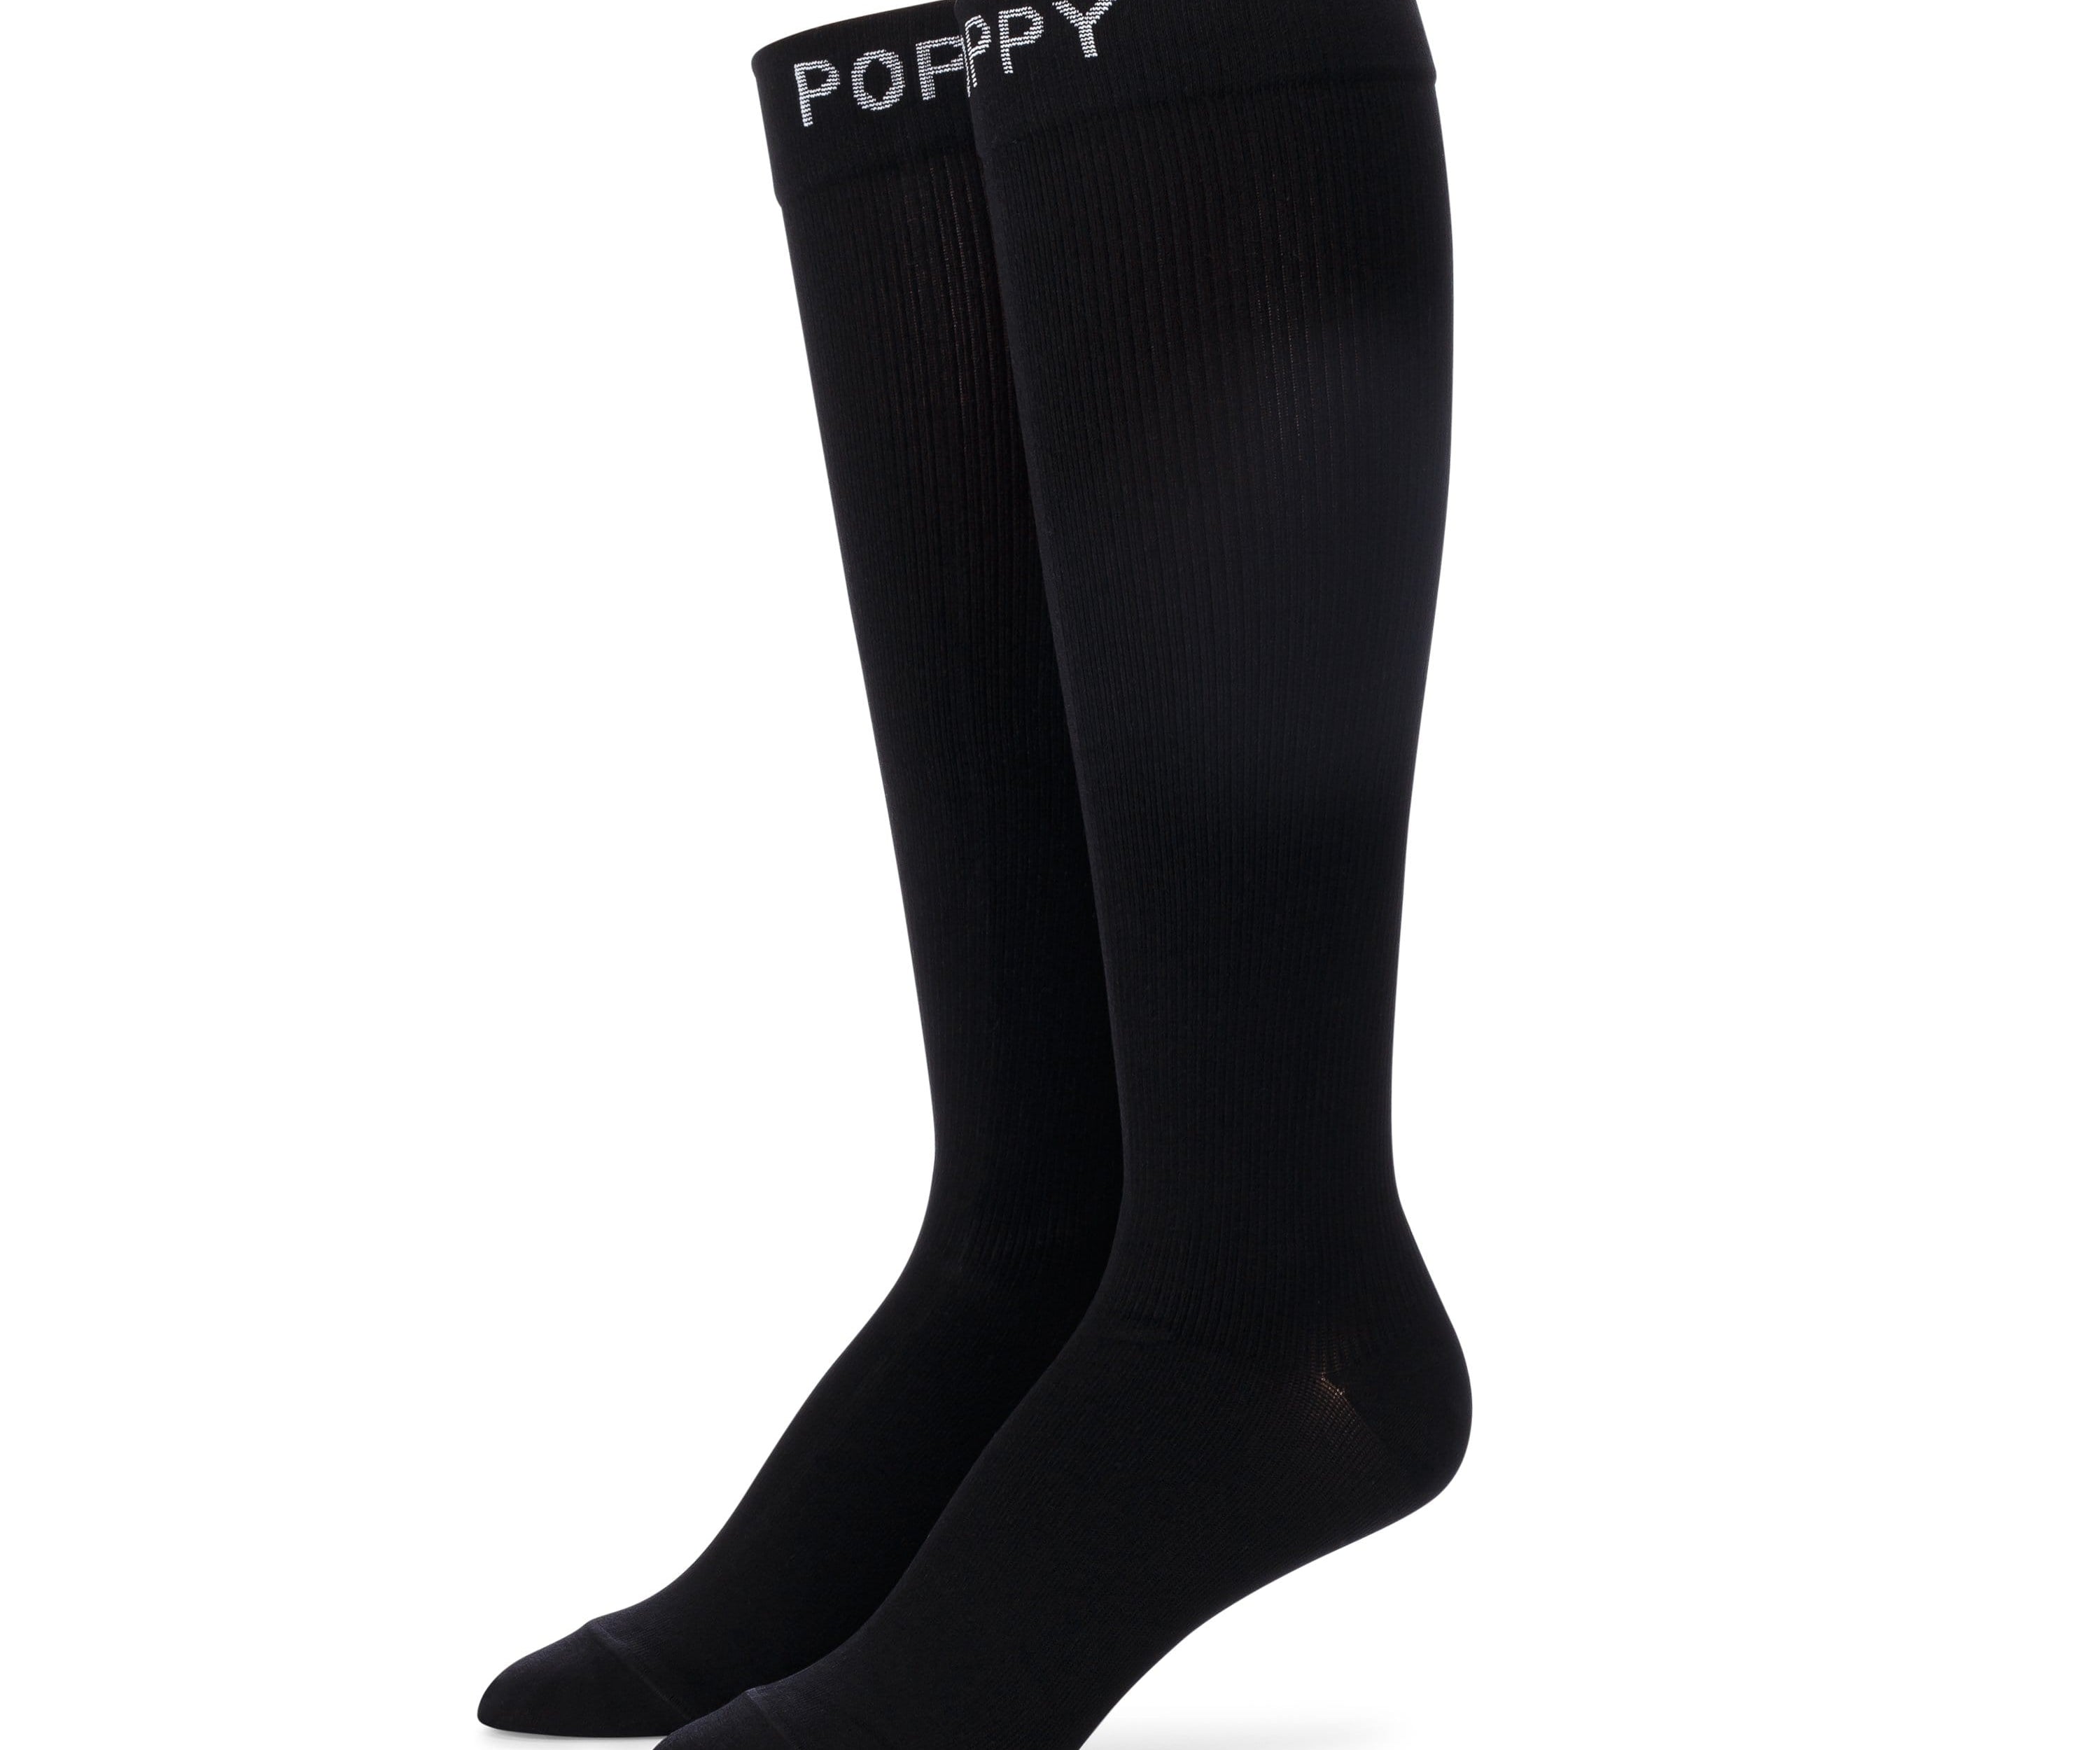 Standing detail photo for premium black compression socks.